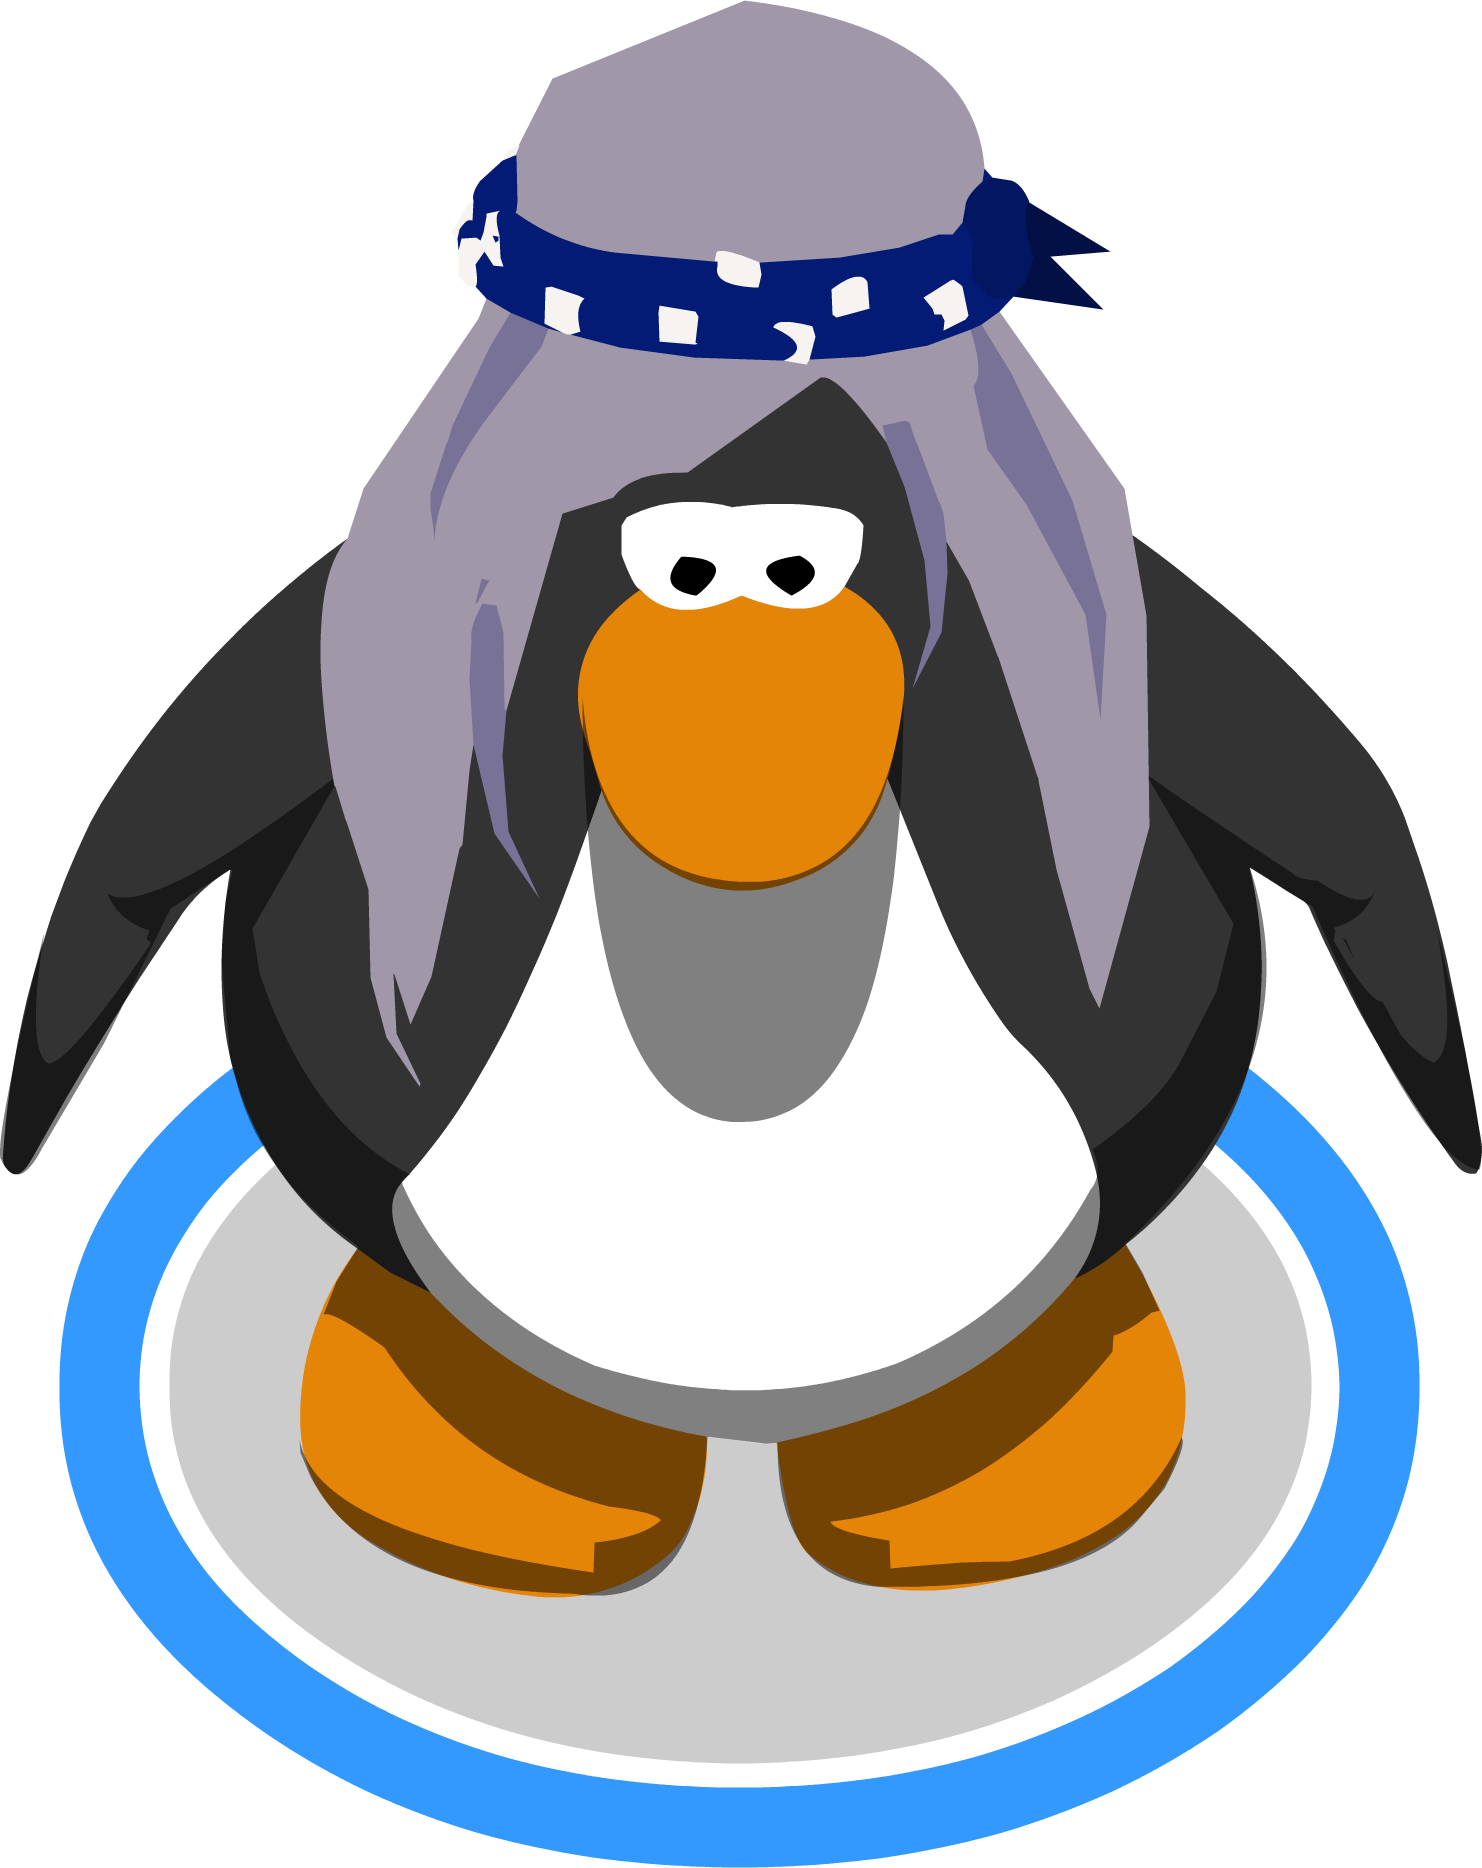 bandana clipart club penguin